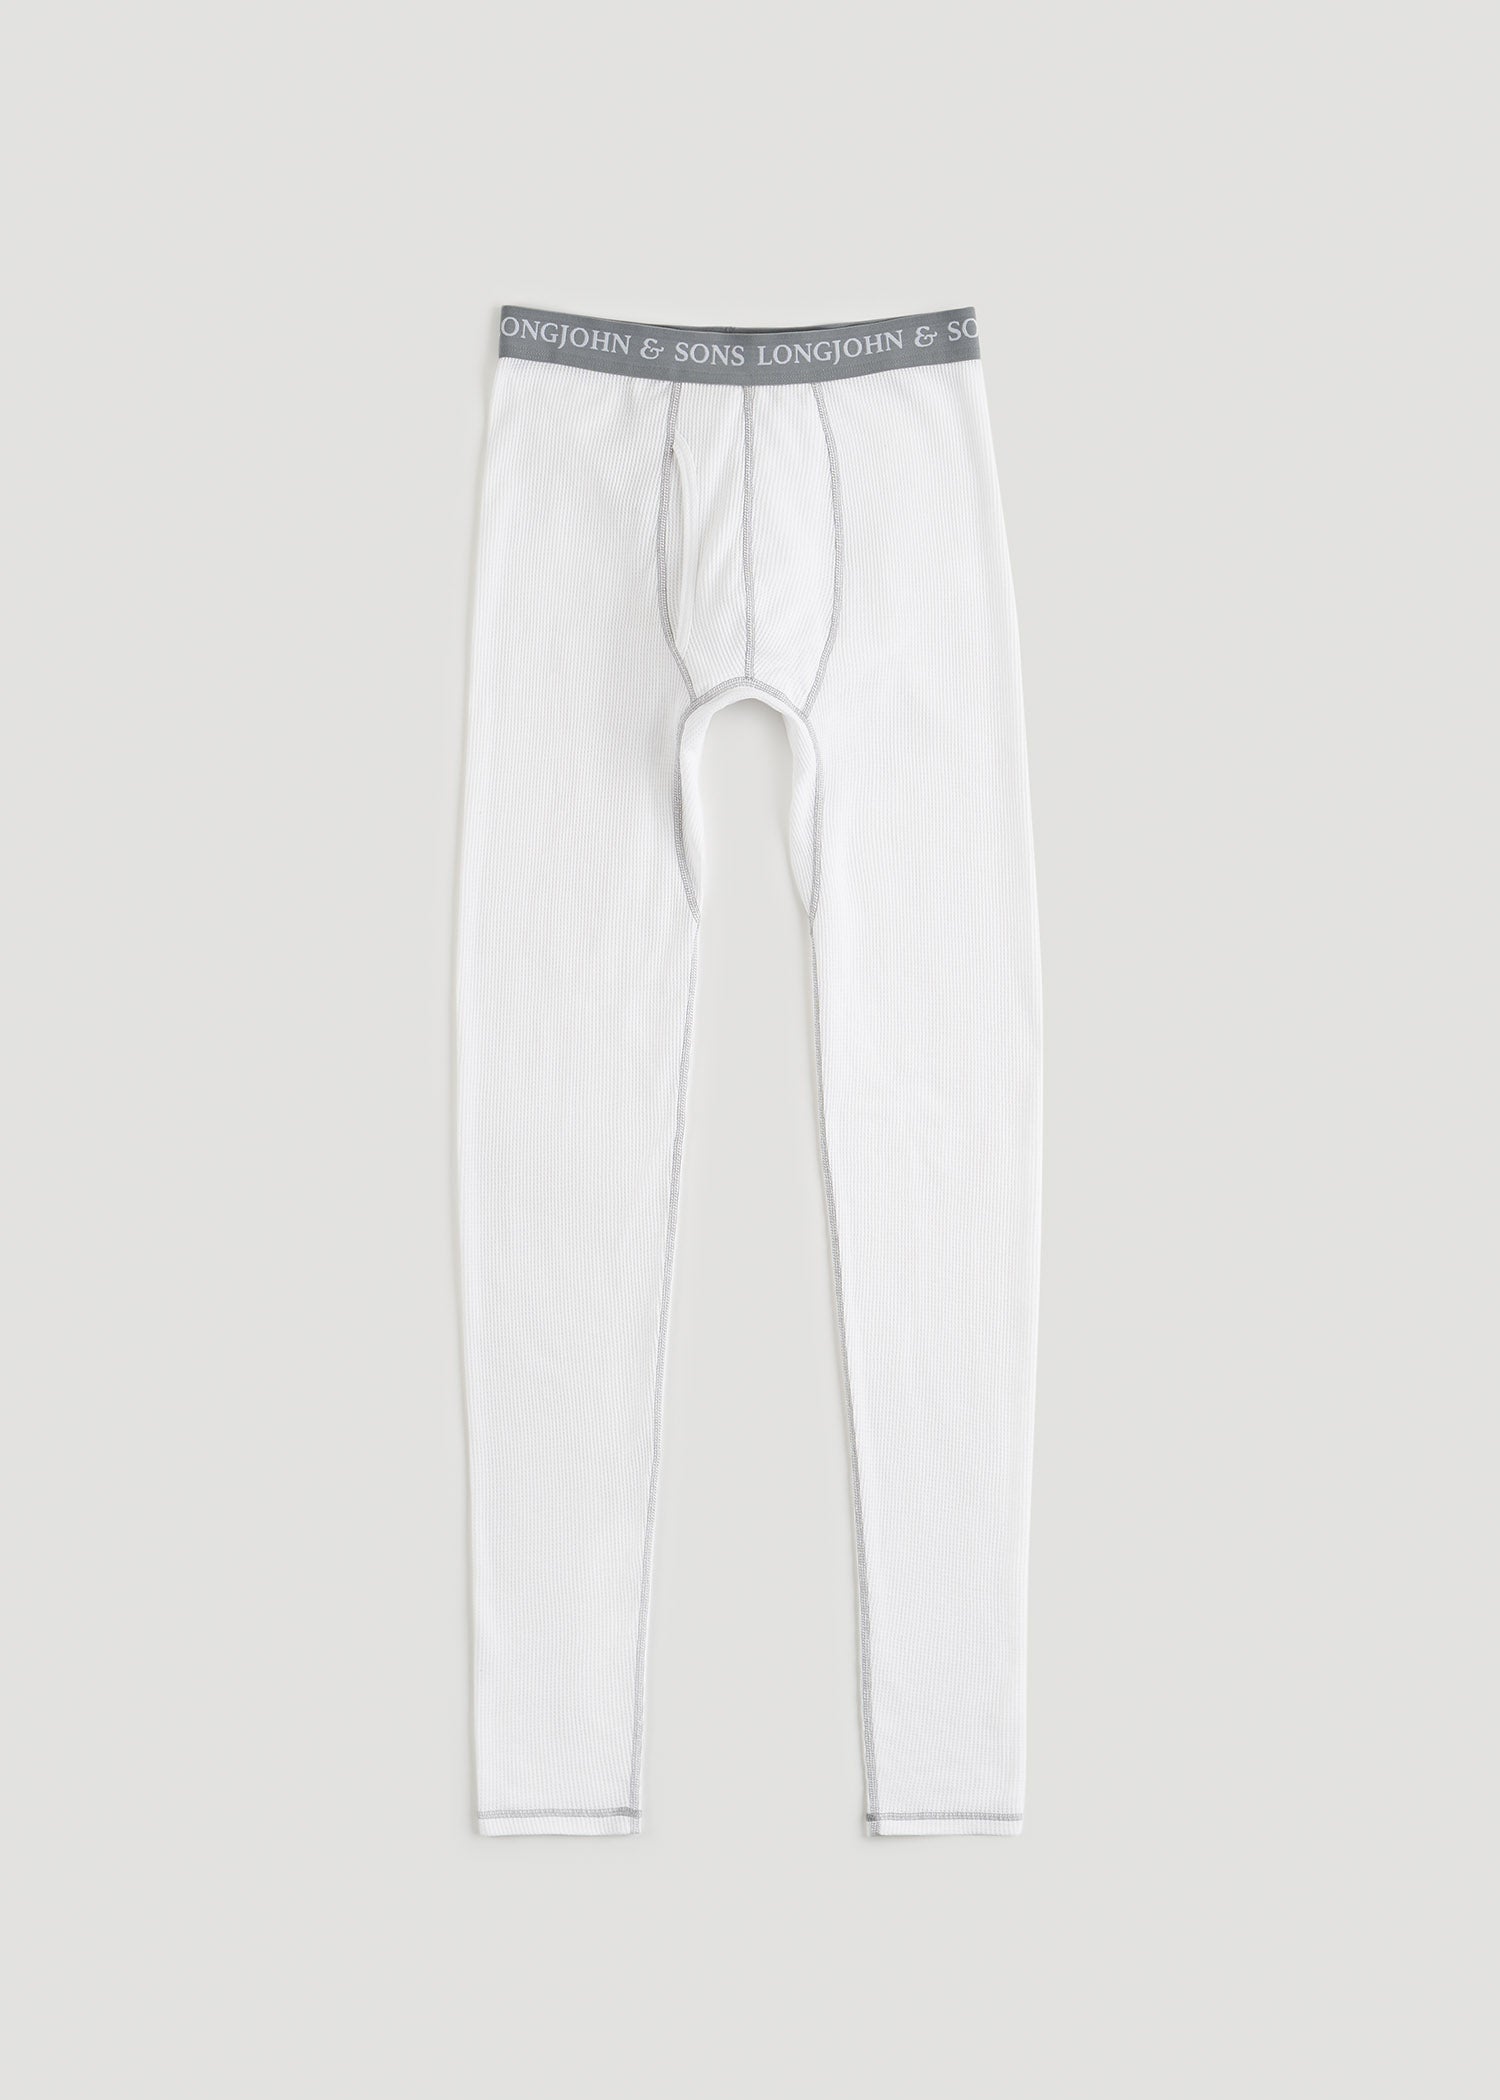 Men's Thermal Underwear Pants Ice Silk See Through Long John